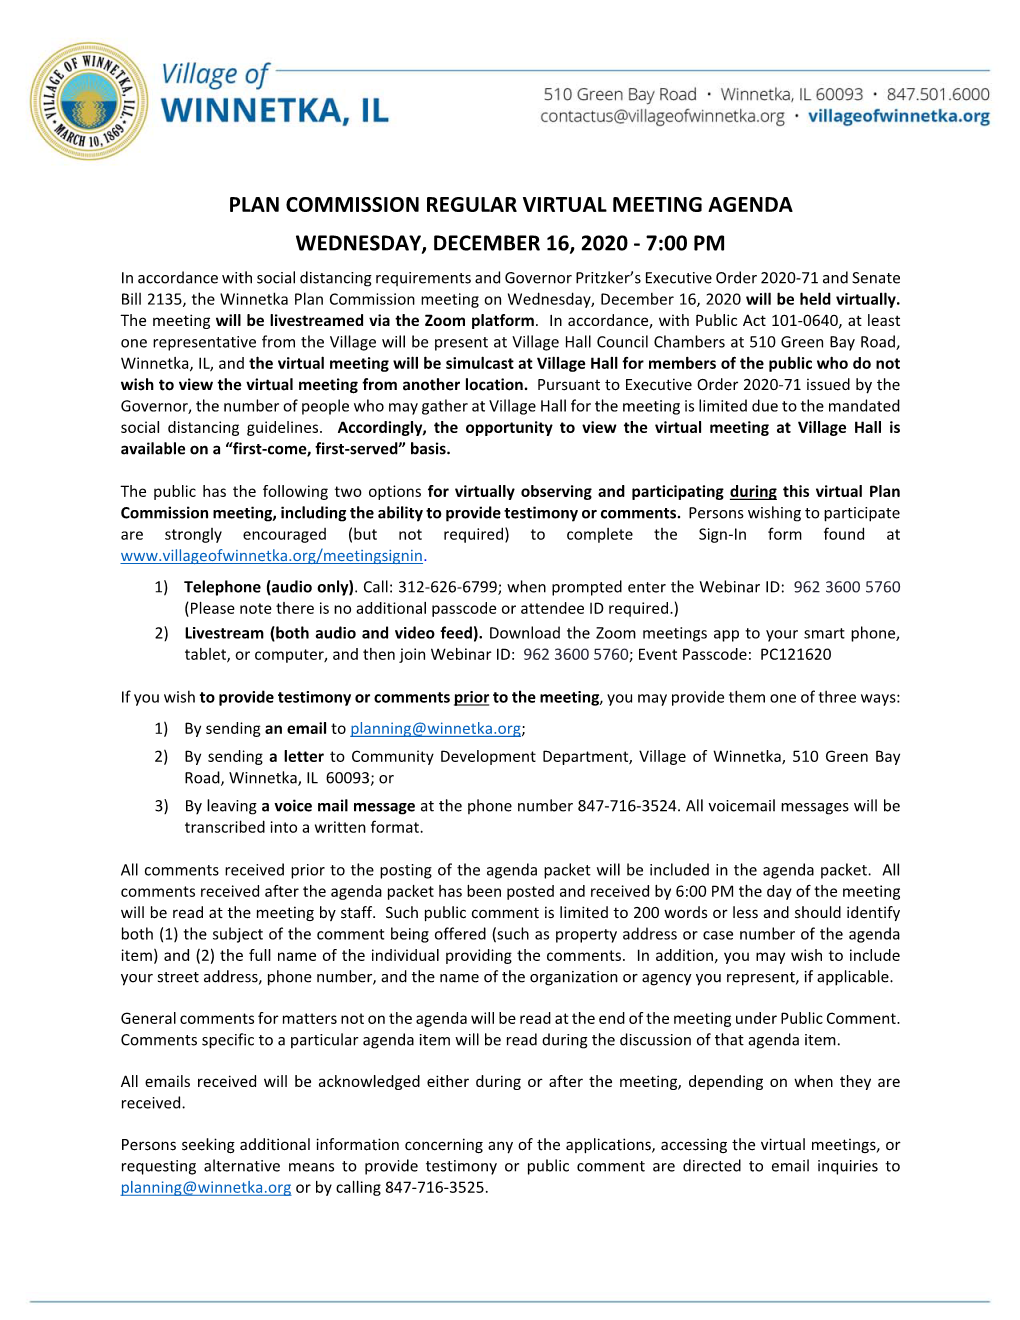 Plan Commission Regular Virtual Meeting Agenda Wednesday